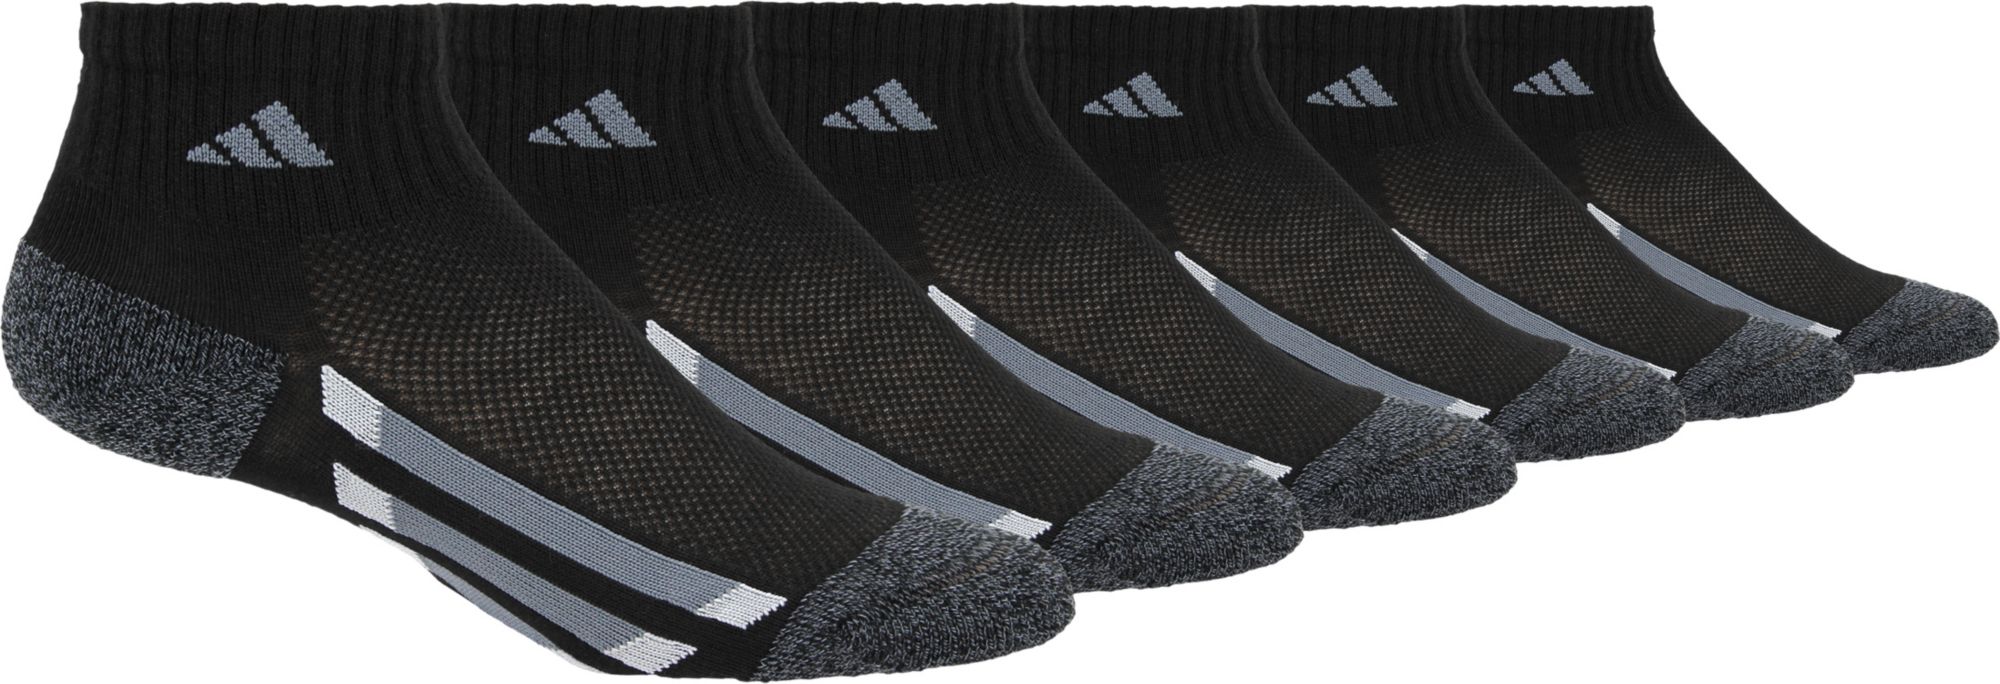 adidas medium socks size chart